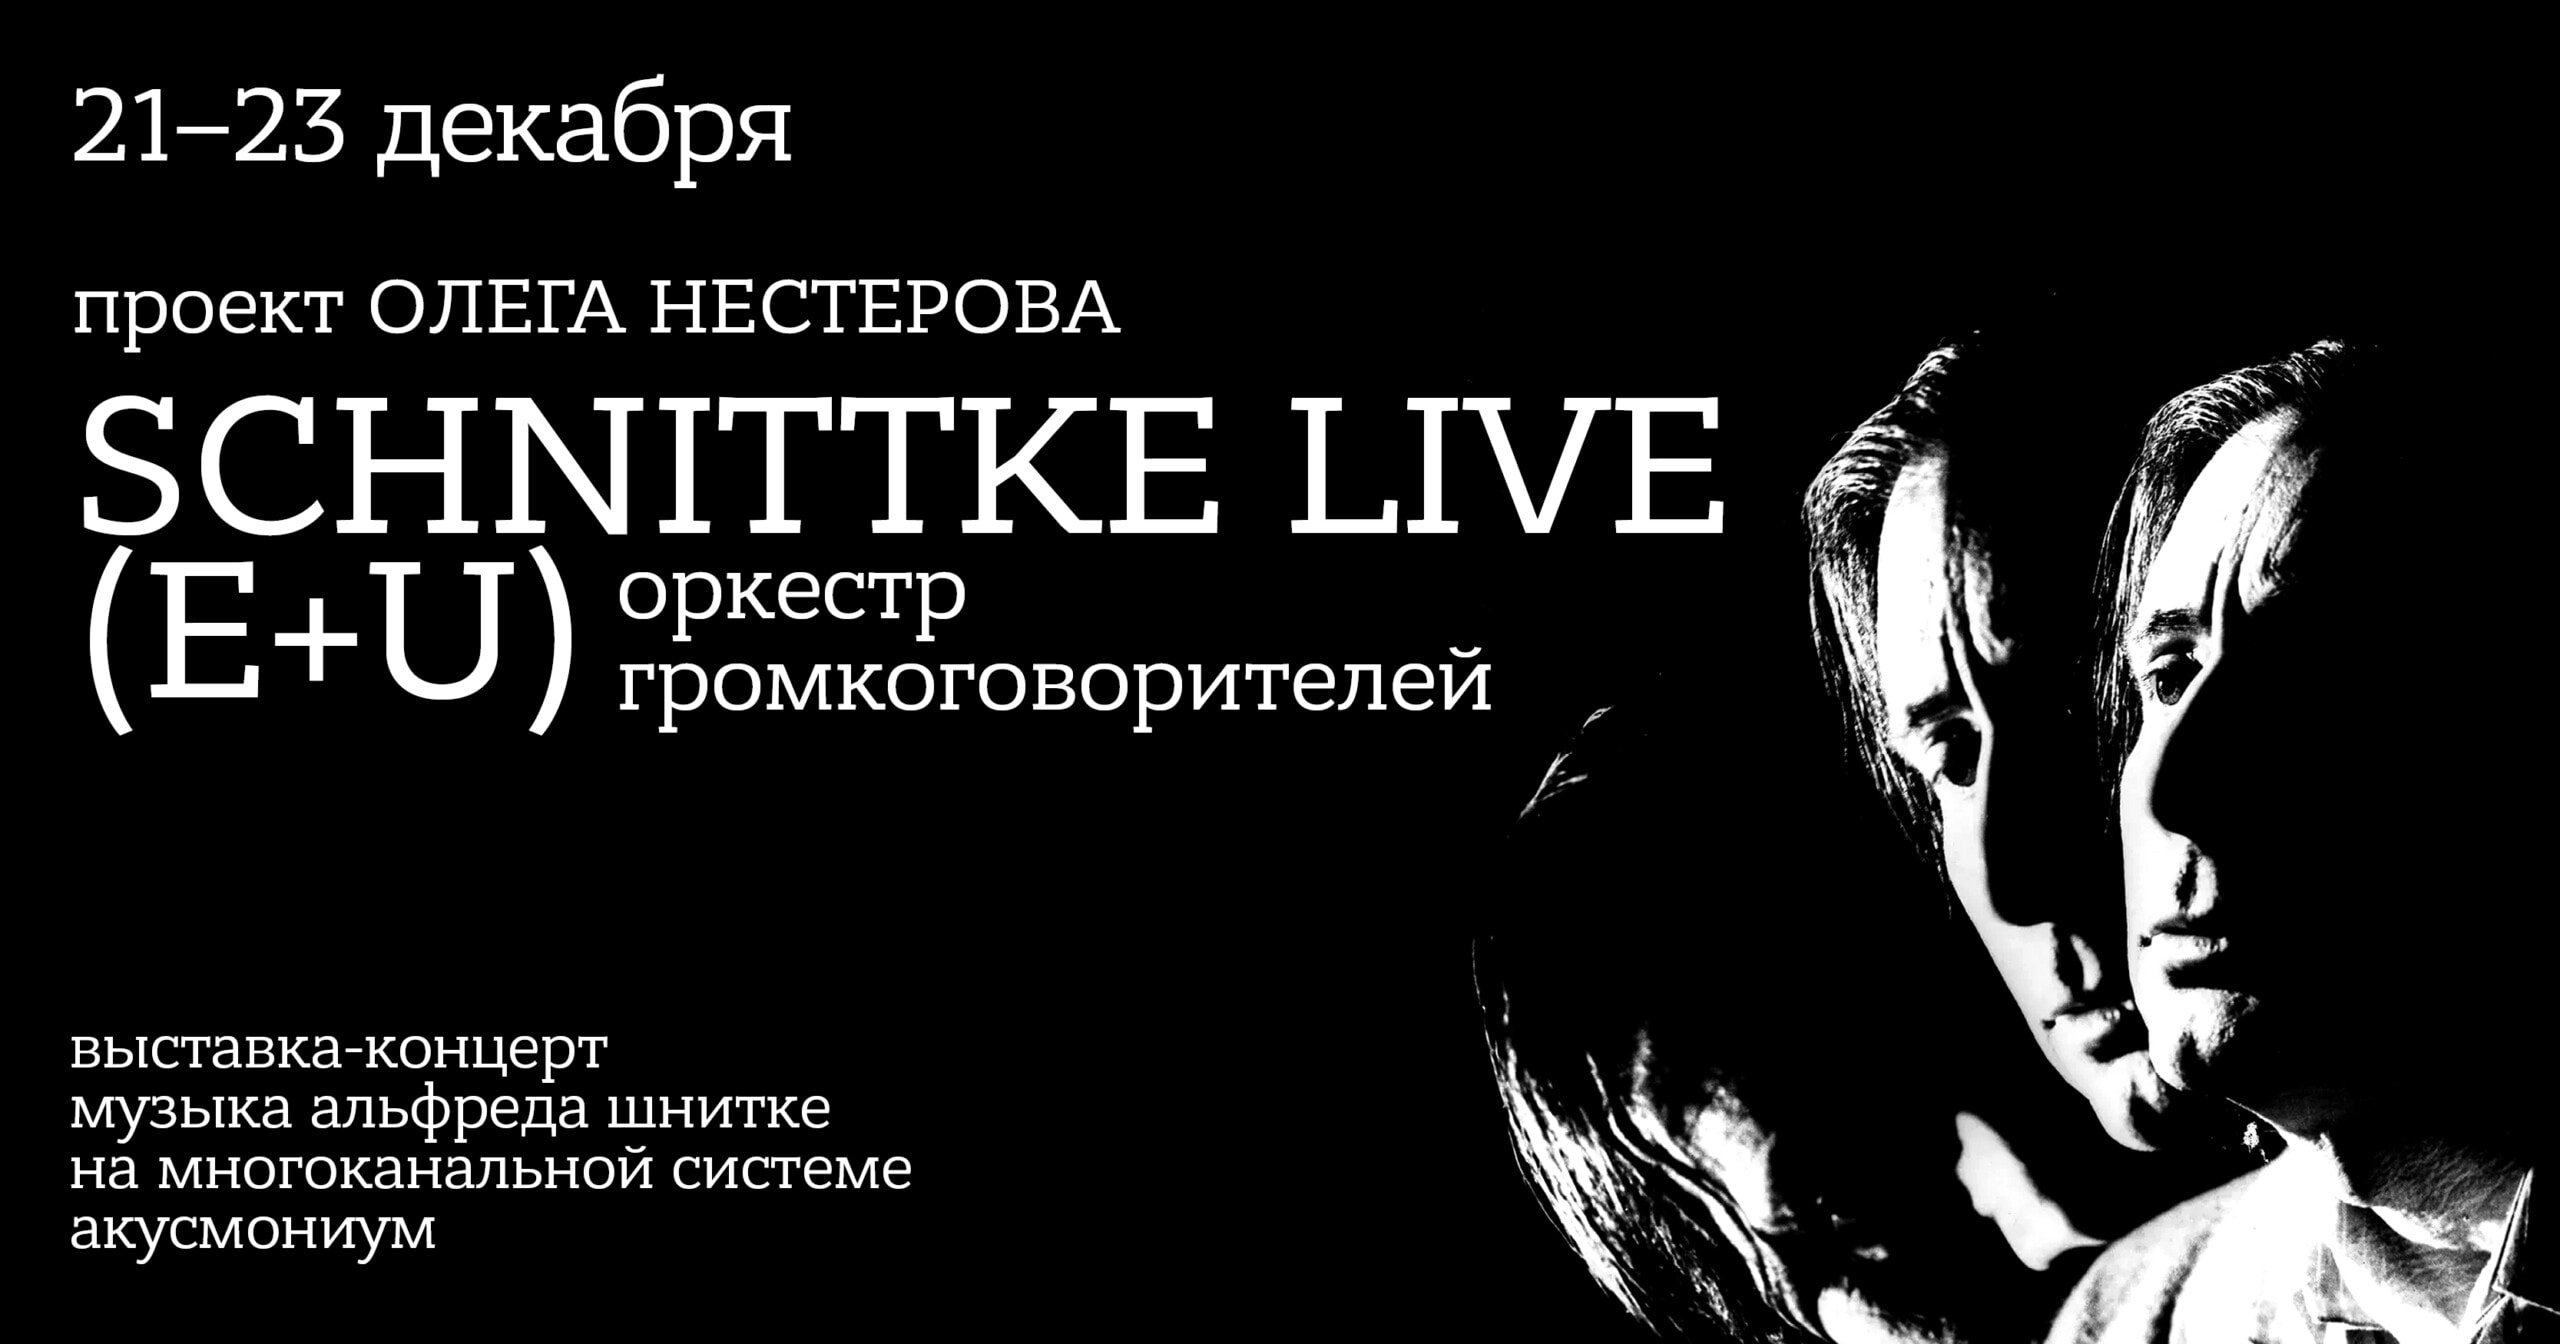 «Schnitke live (E+U). Оркестр громкоговорителей»